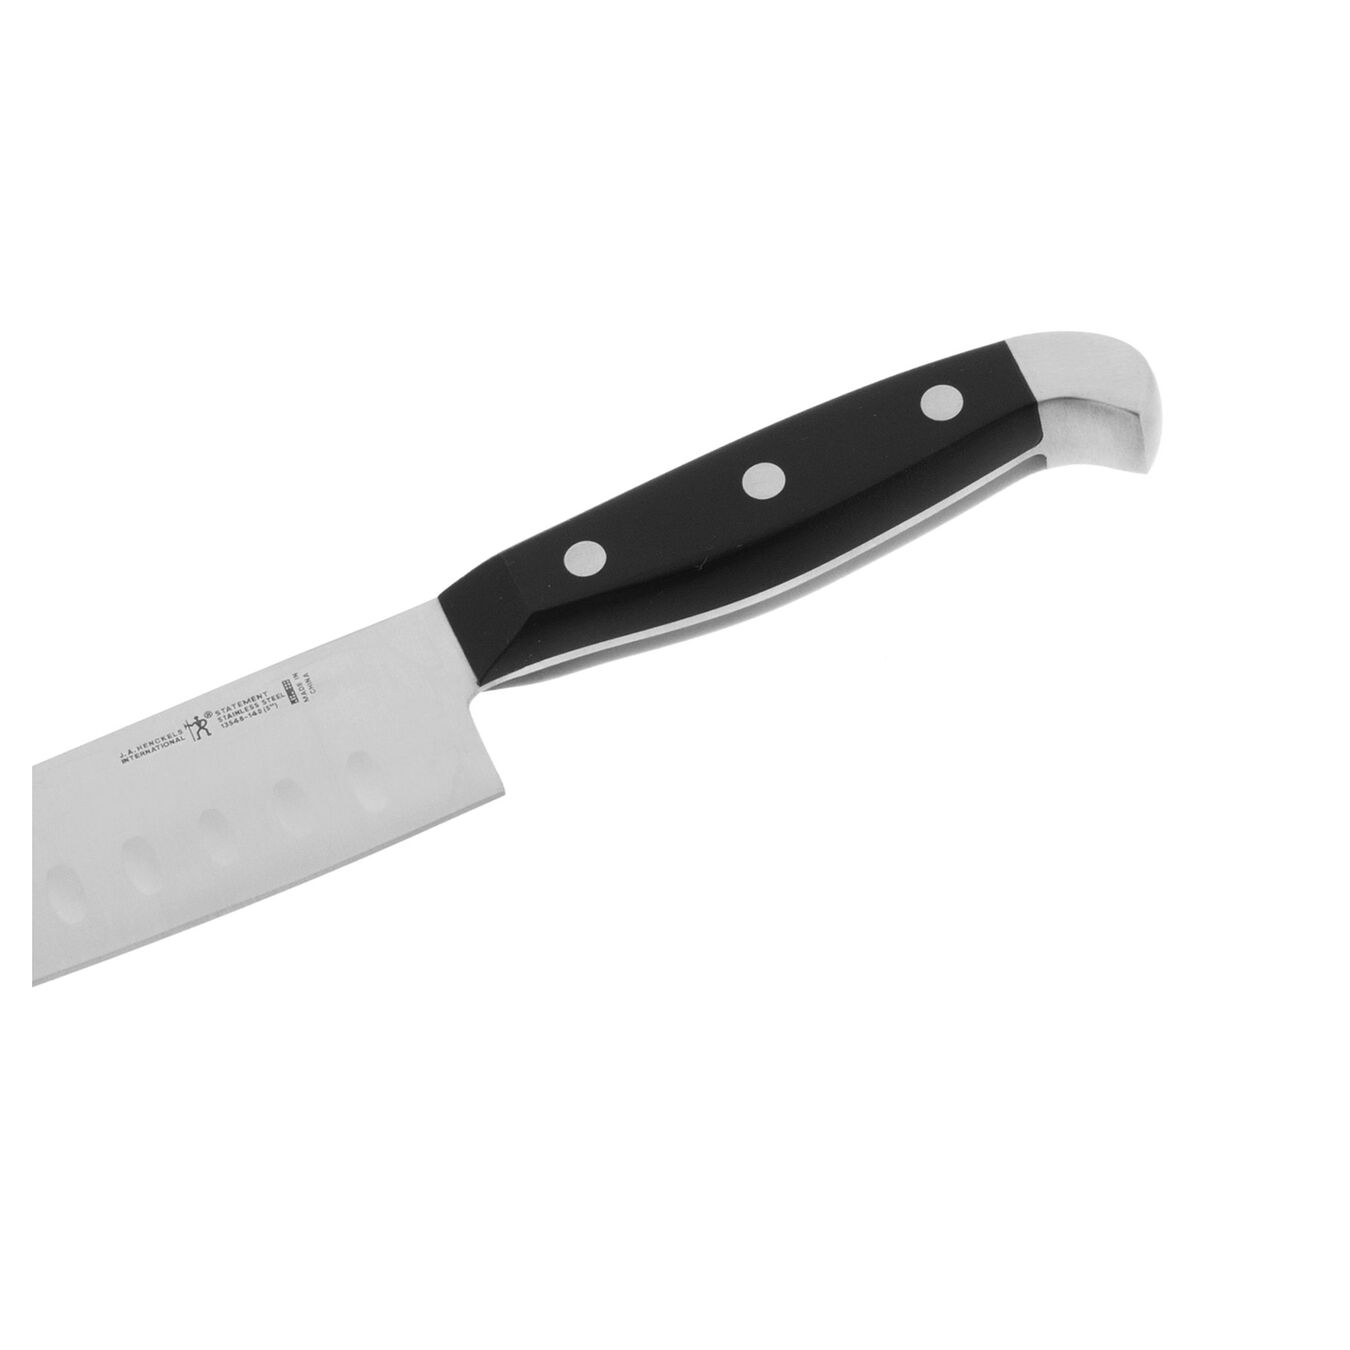 5-inch, Hollow Edge Santoku Knife,,large 2